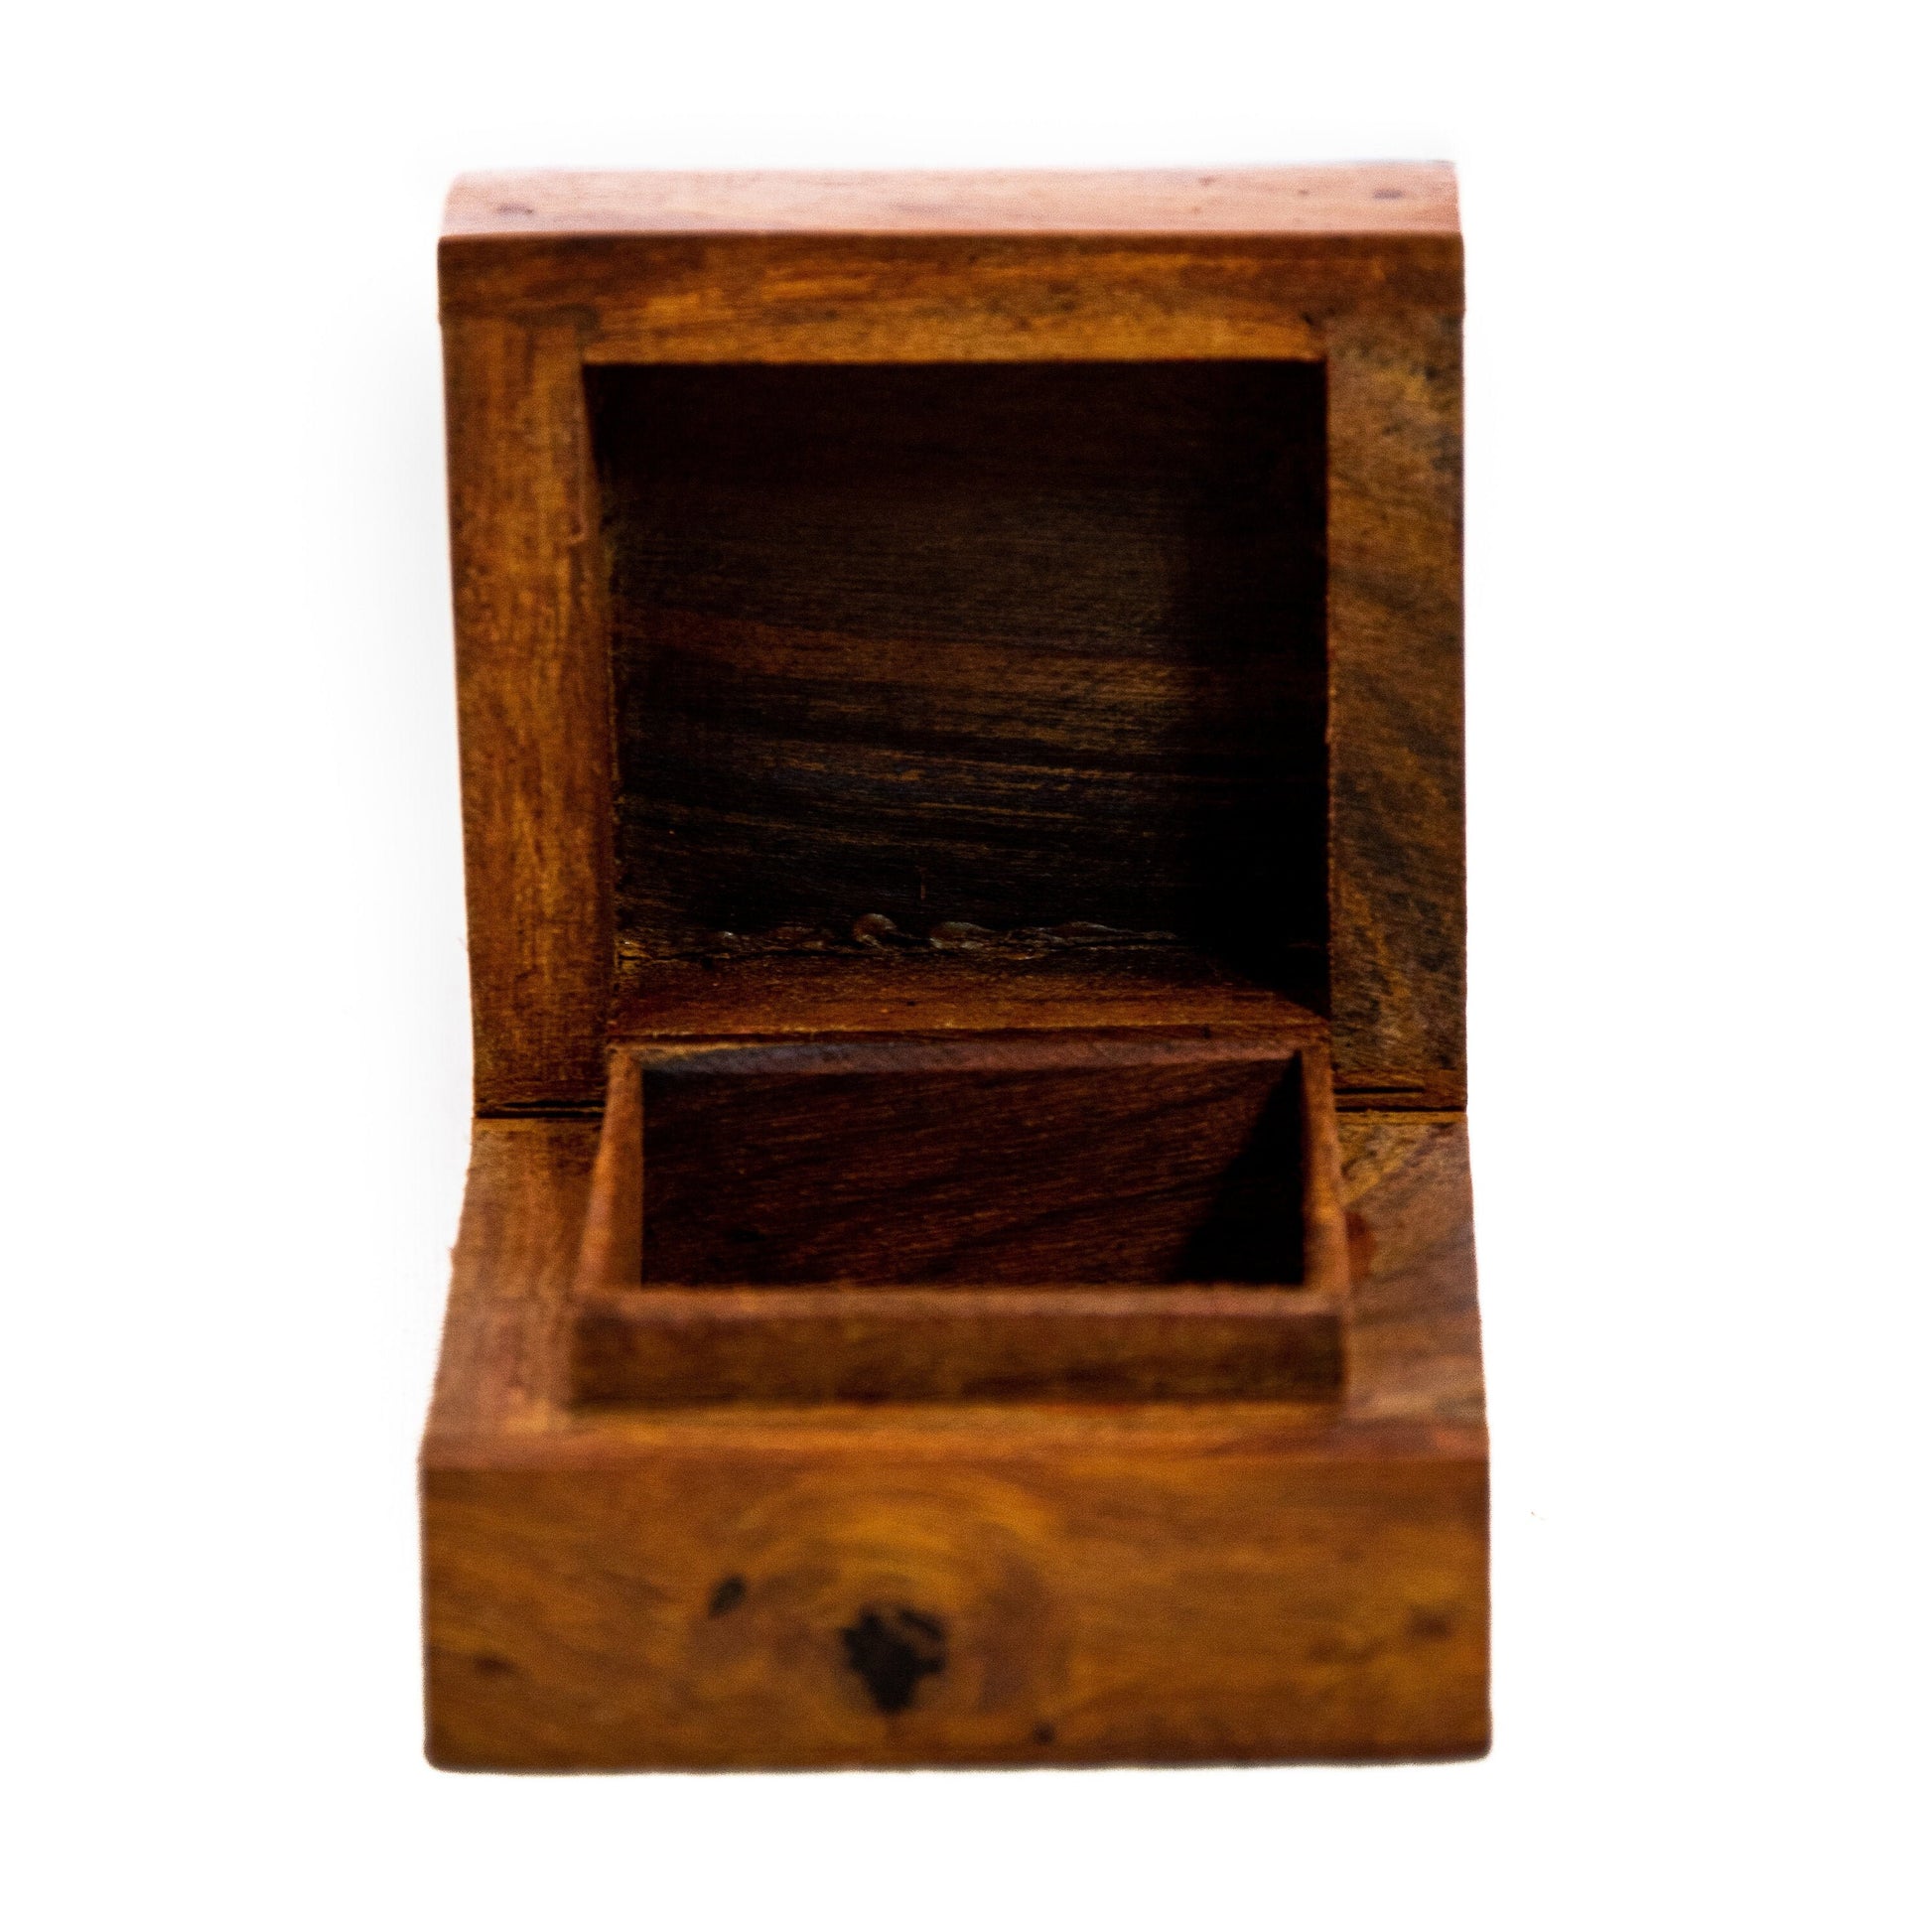 Handmade religious carved wooden prayer box with christian cross, greek vintage decorative jewelry keepsake box 8x8x5cm, baptism gift TheHolyArt